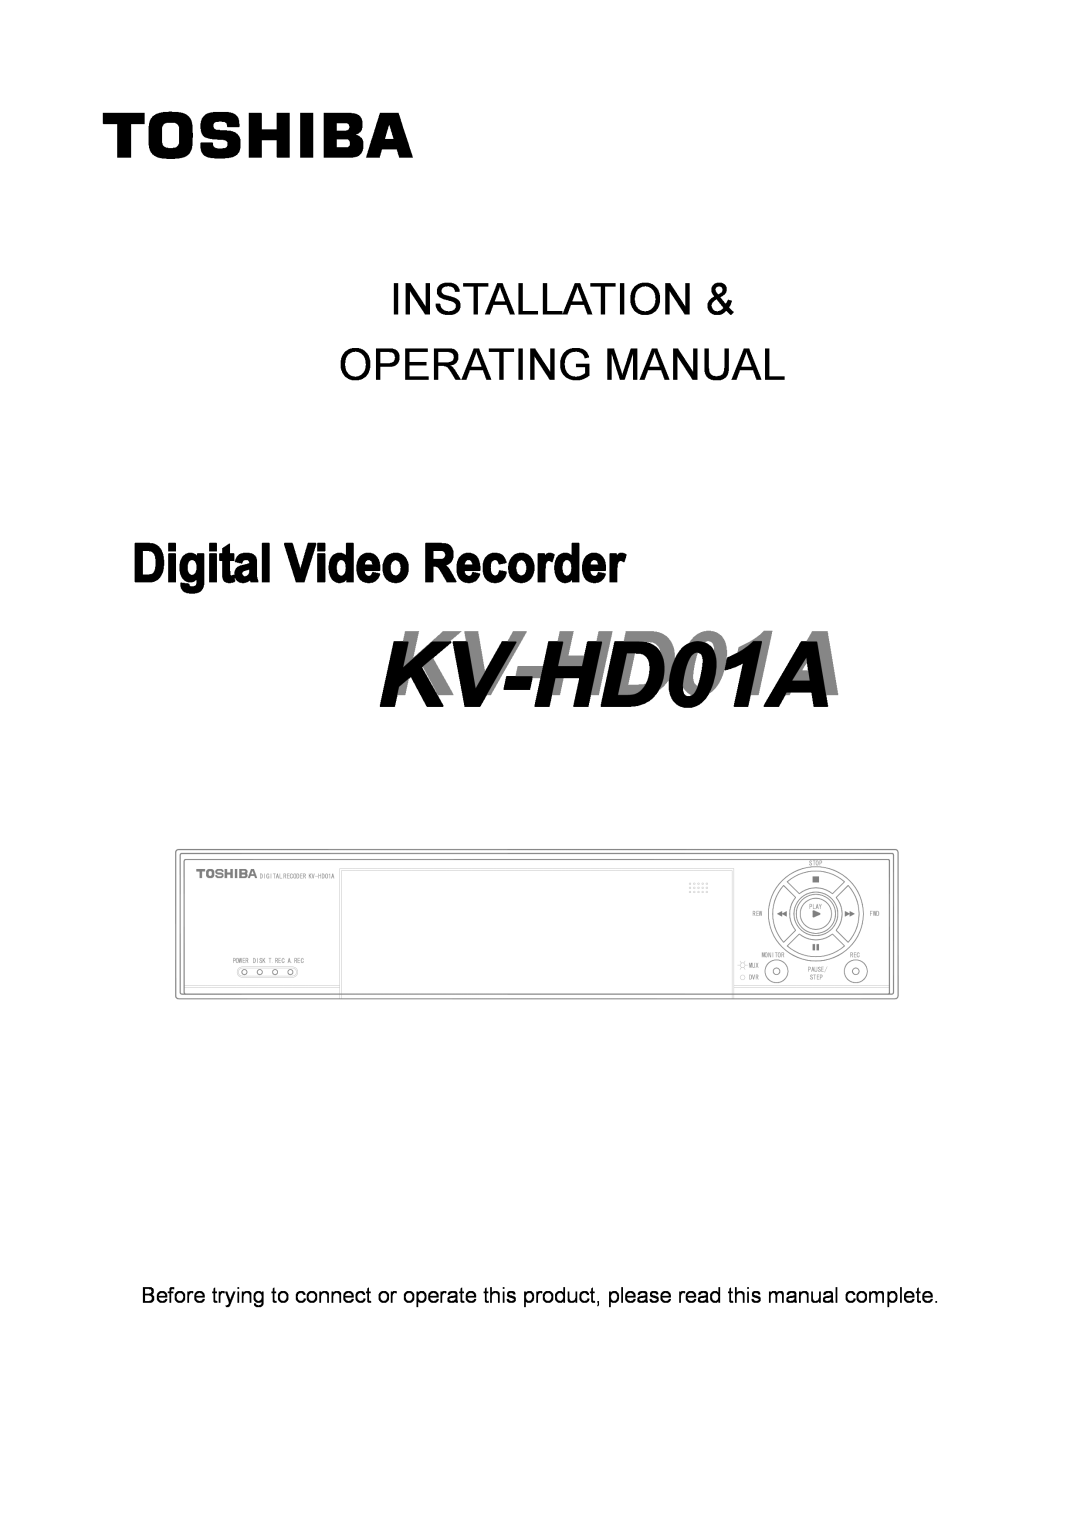 Toshiba manual Installation Operating Manual, S Top, DIGITAL RECODER KV-HD01A, Play, Power Disk T.Rec A.Rec, Monitor 